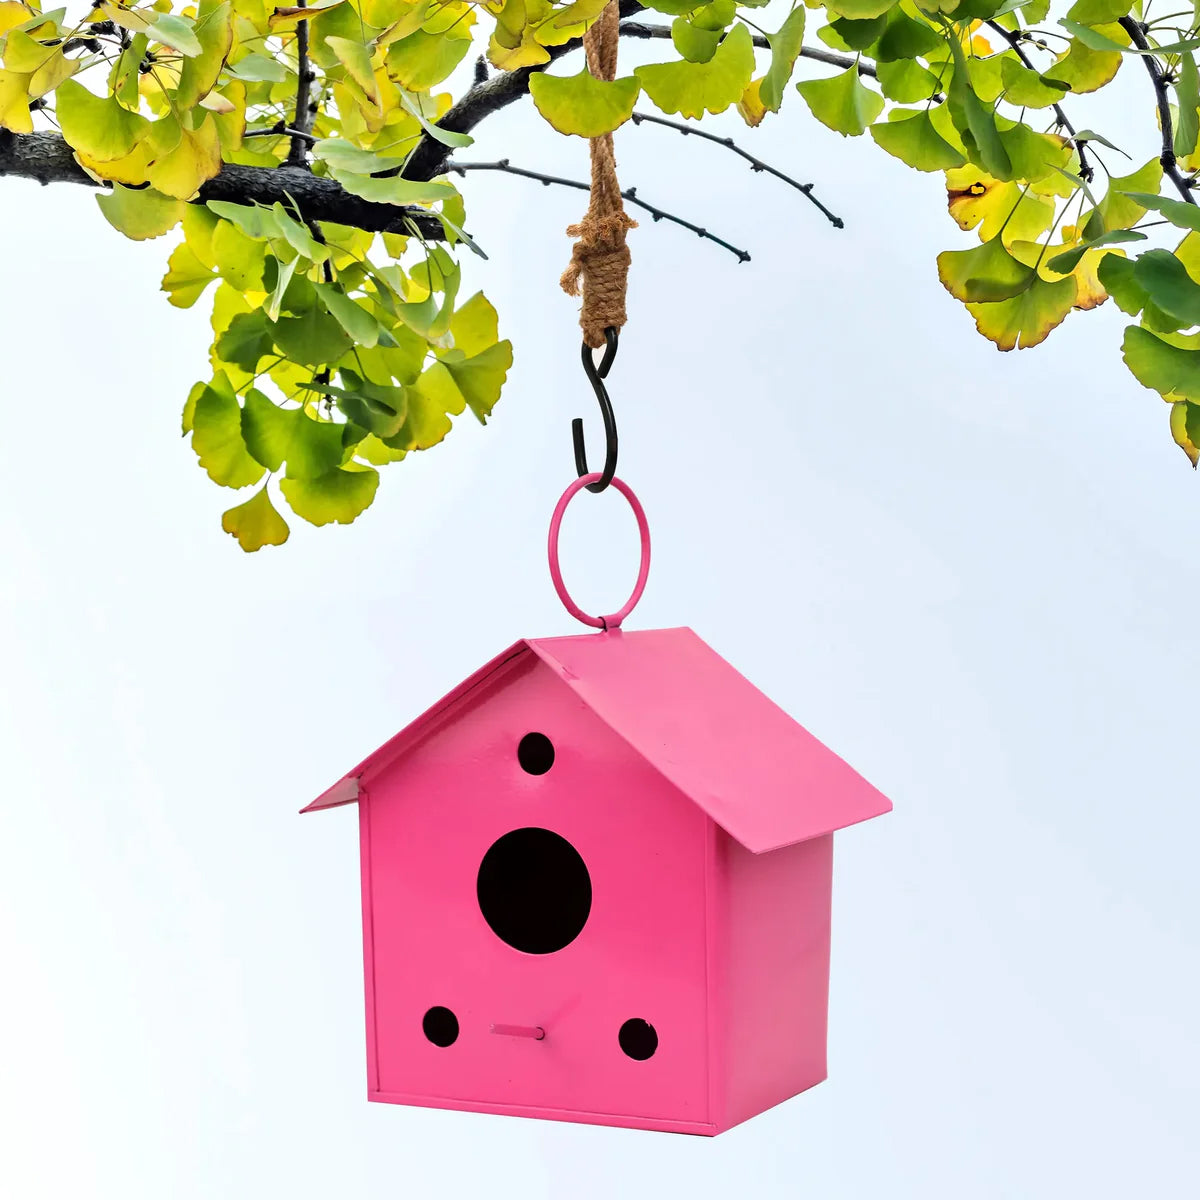 Metal Hanging Bird House & Feeder for Gardens